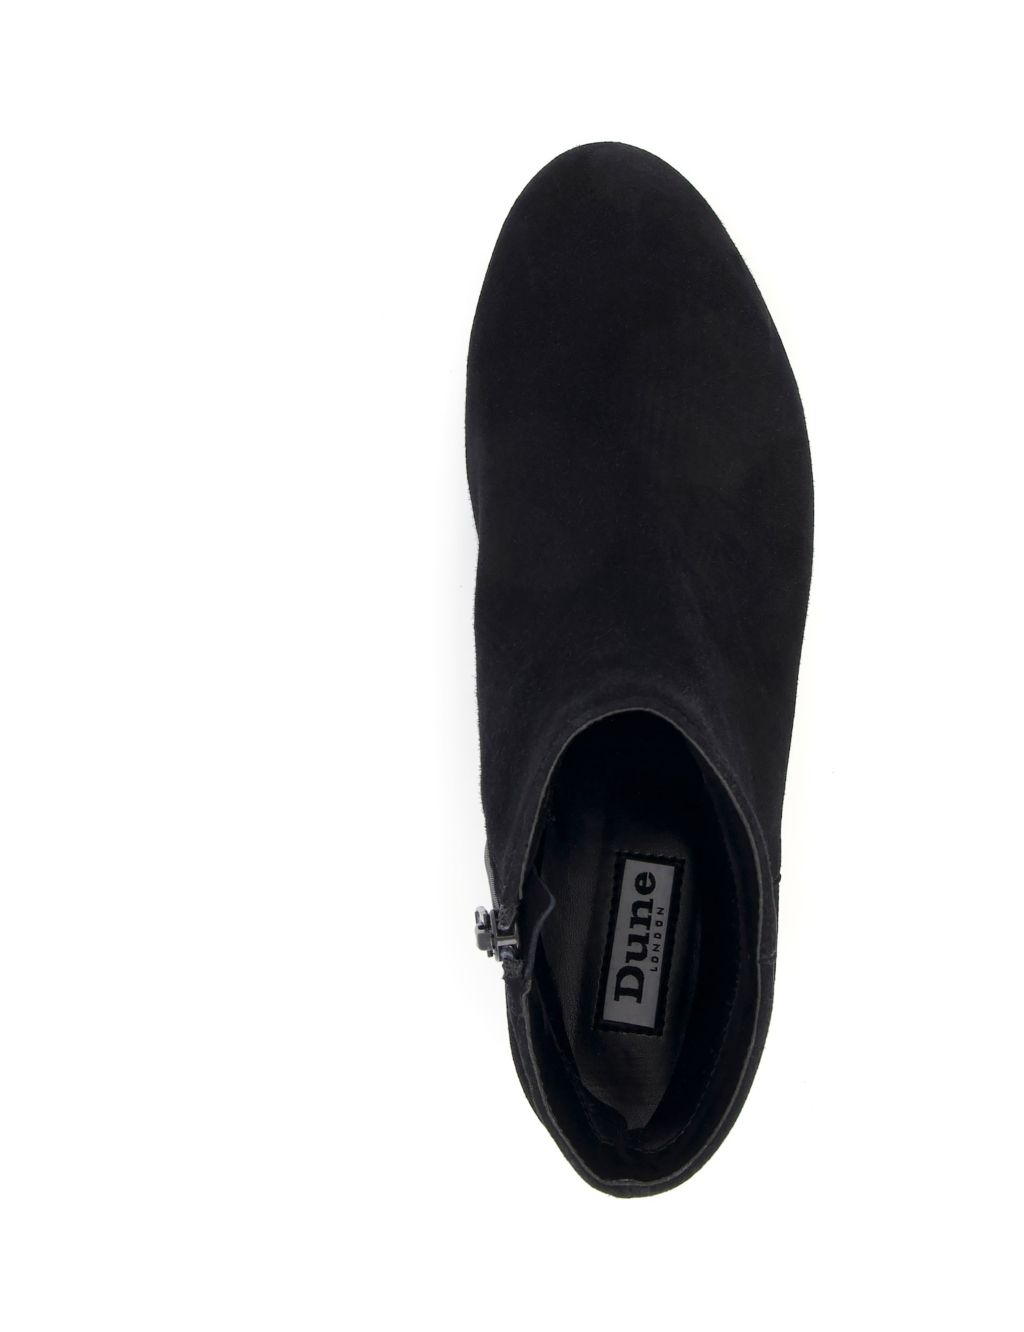 Suede Block Heel Ankle Boots | Dune London | M&S